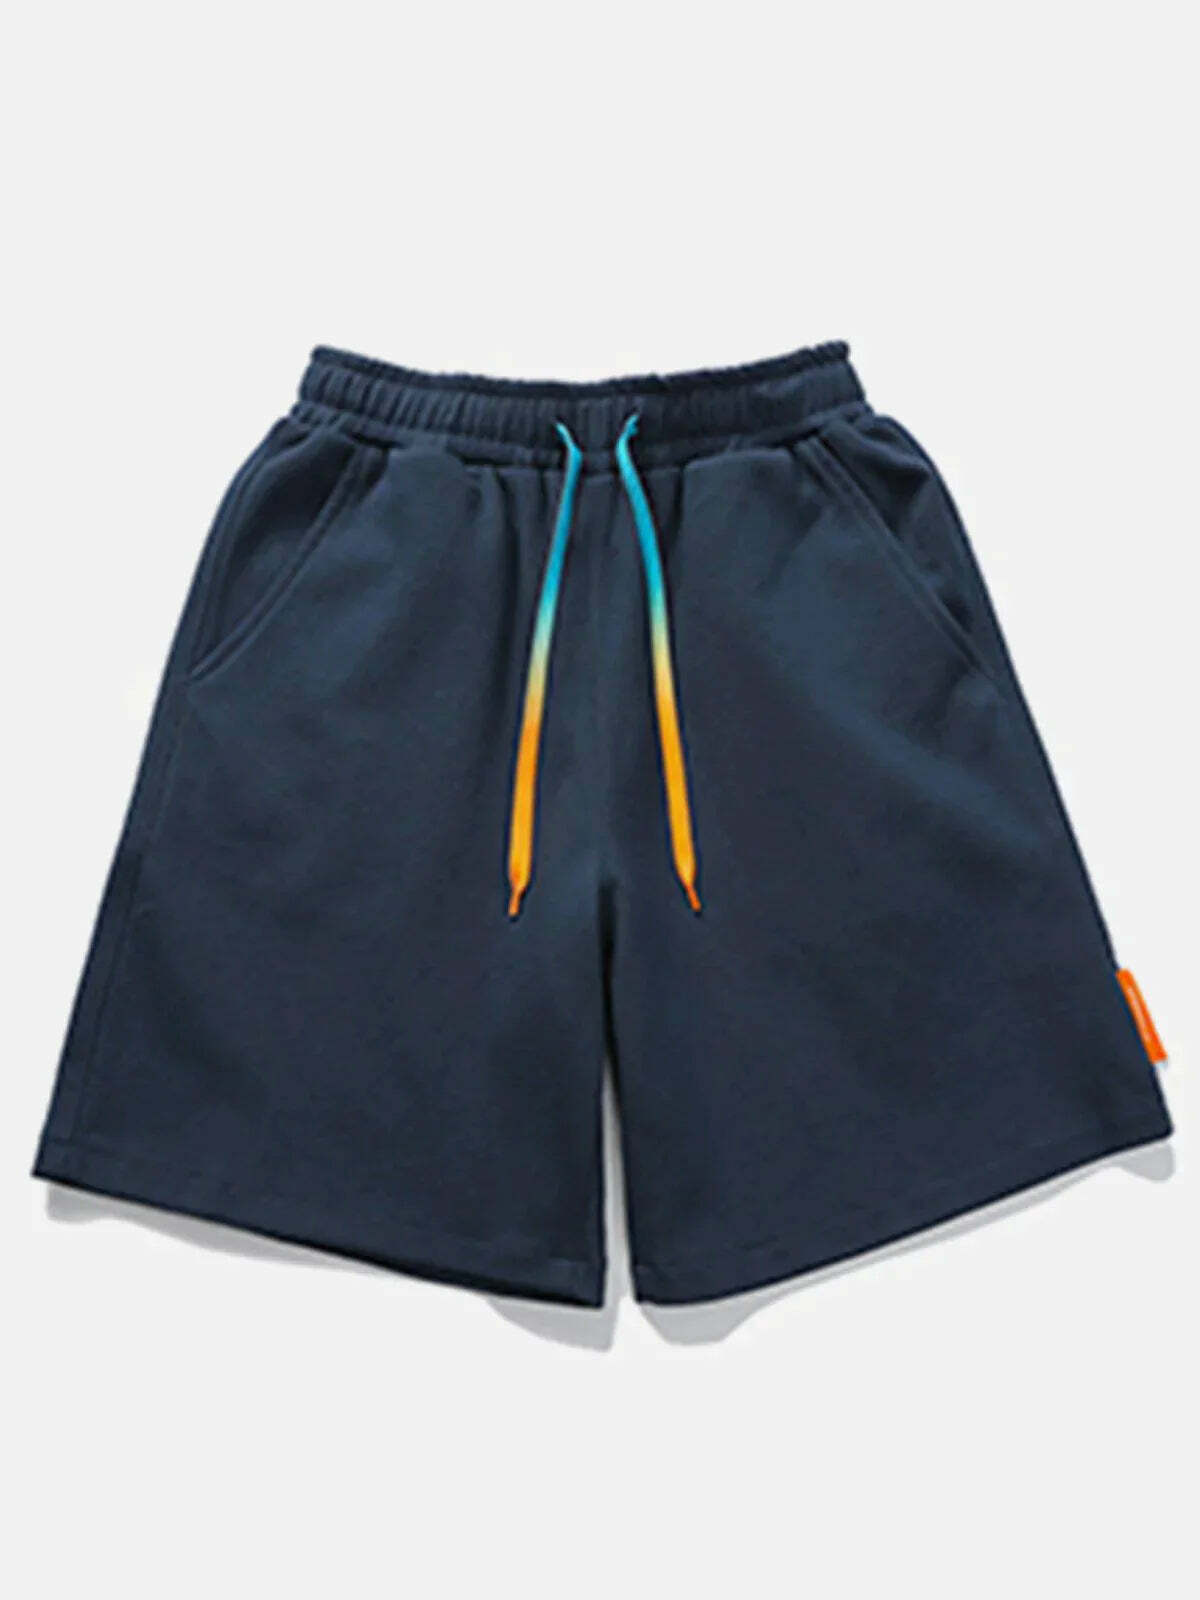 colored drawstring shorts youthful & custom design 7079